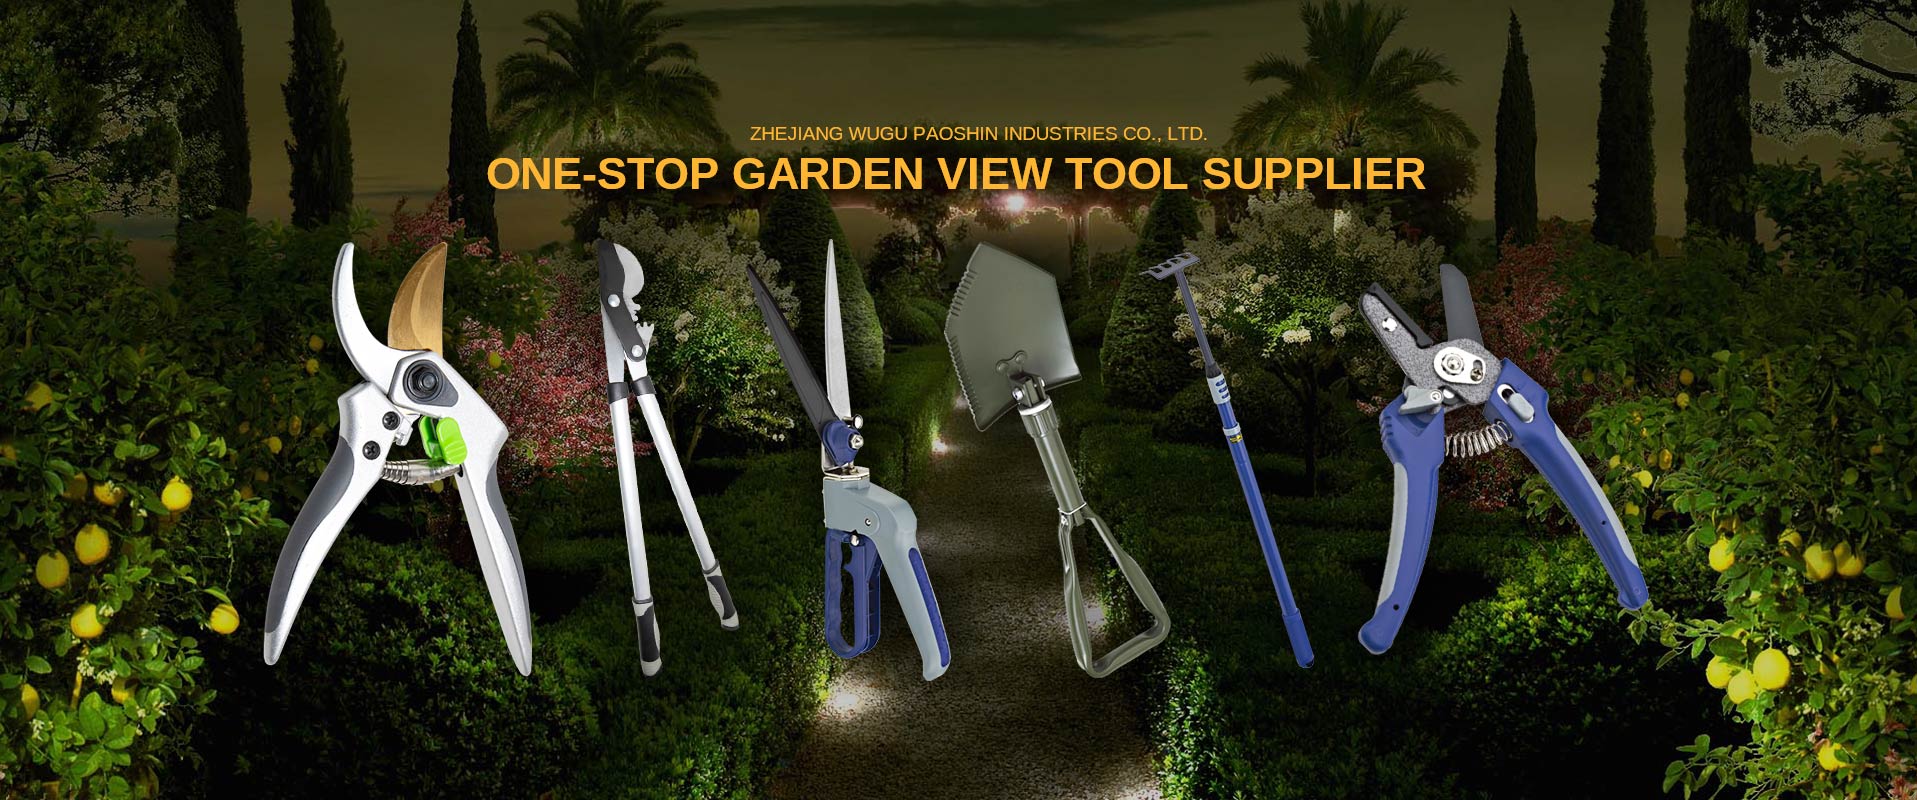 Classification of common garden tools